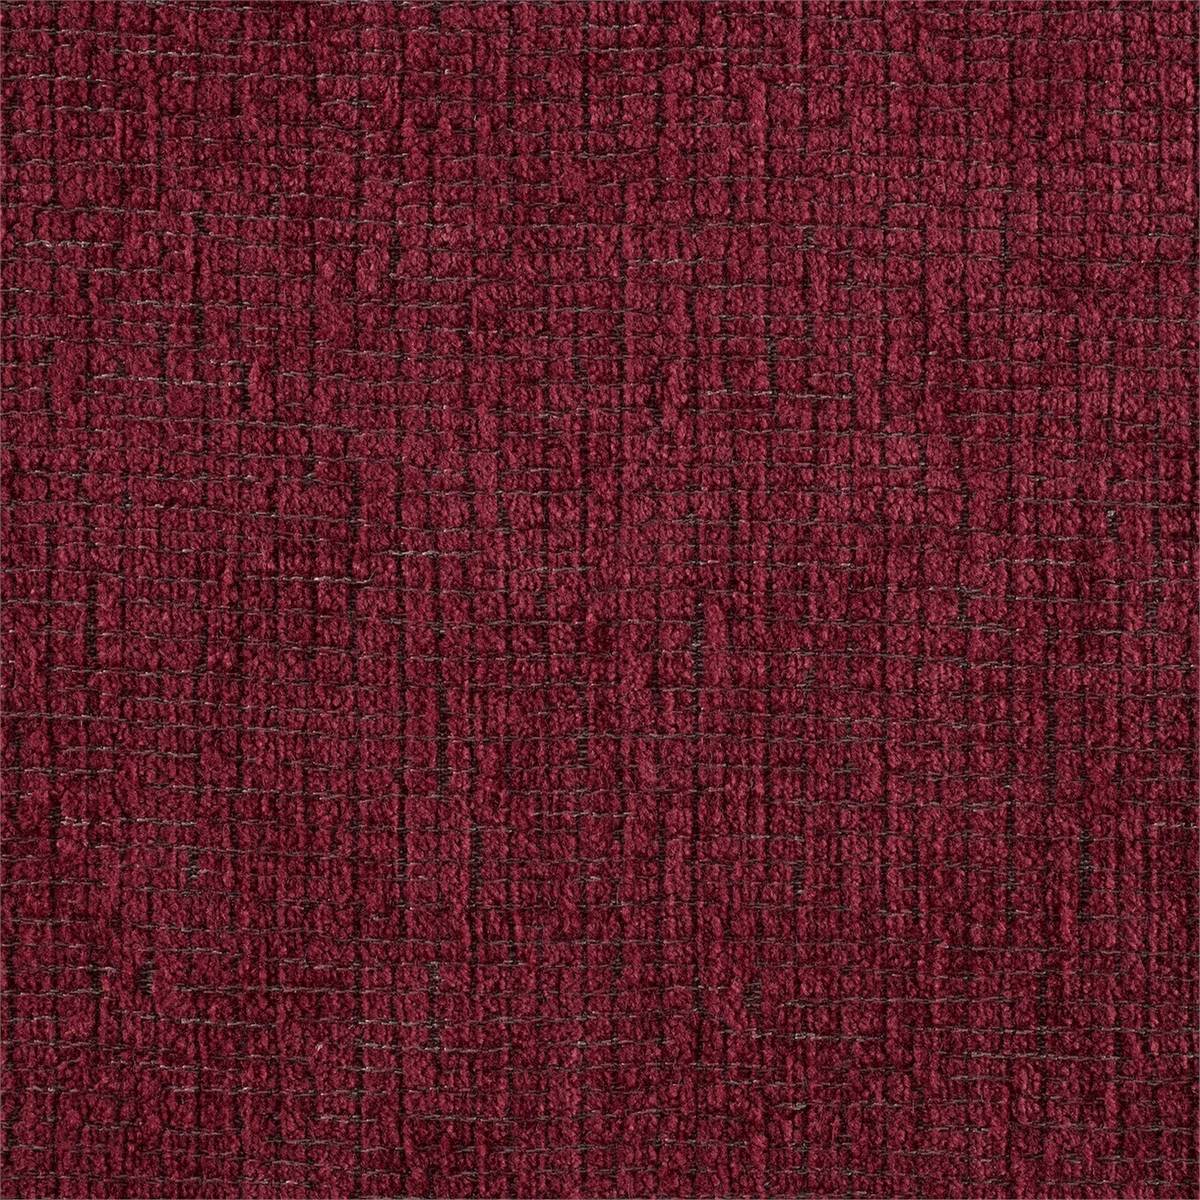 Tessella Claret Fabric by Sanderson